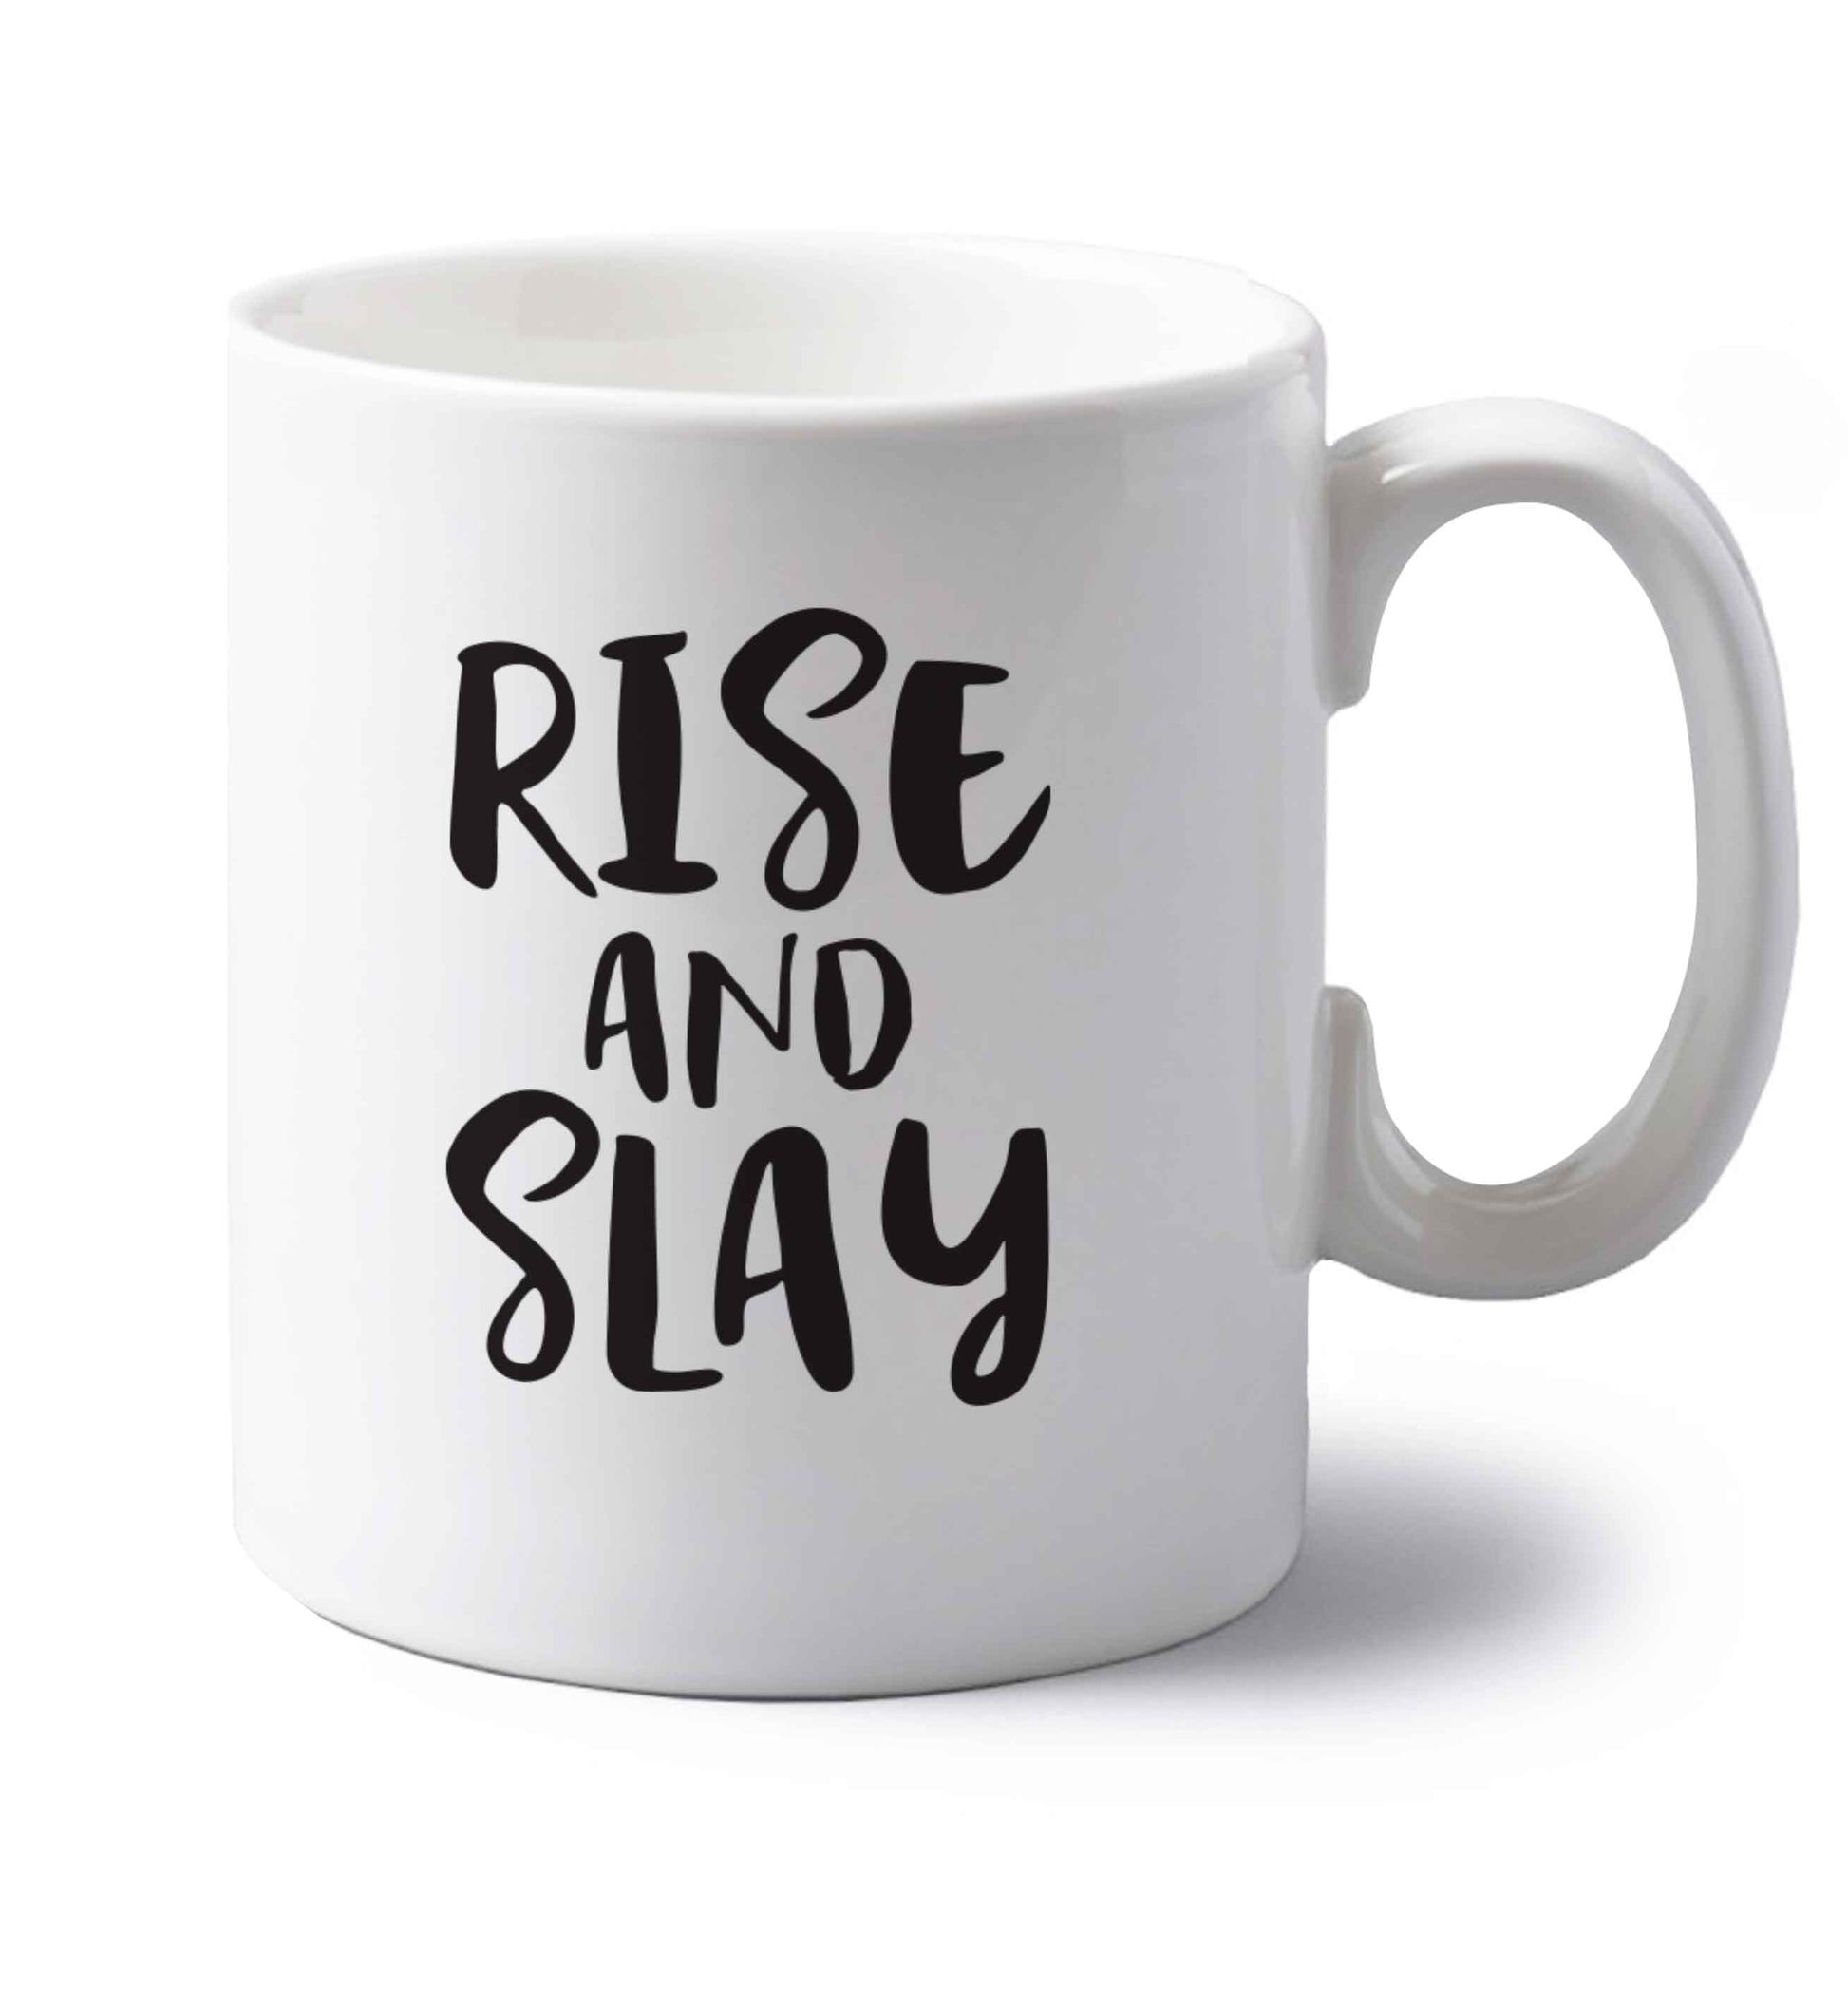 Rise and slay left handed white ceramic mug 